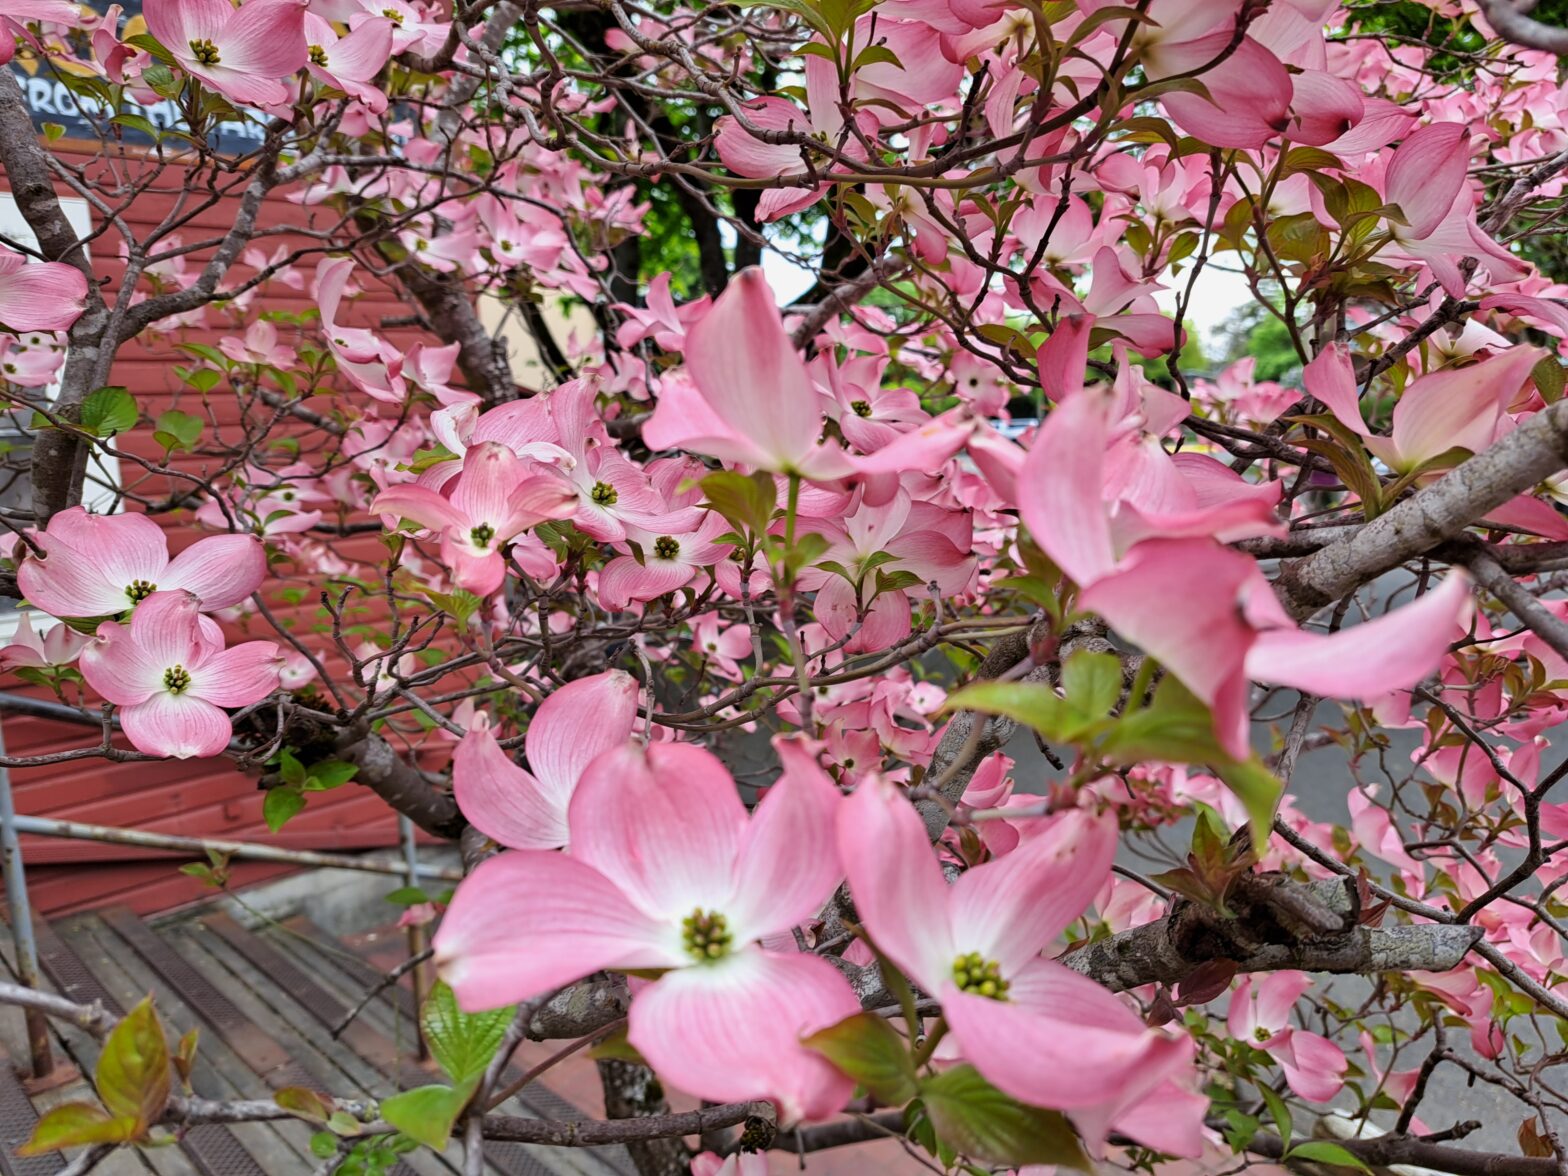 pink dogwood flowers